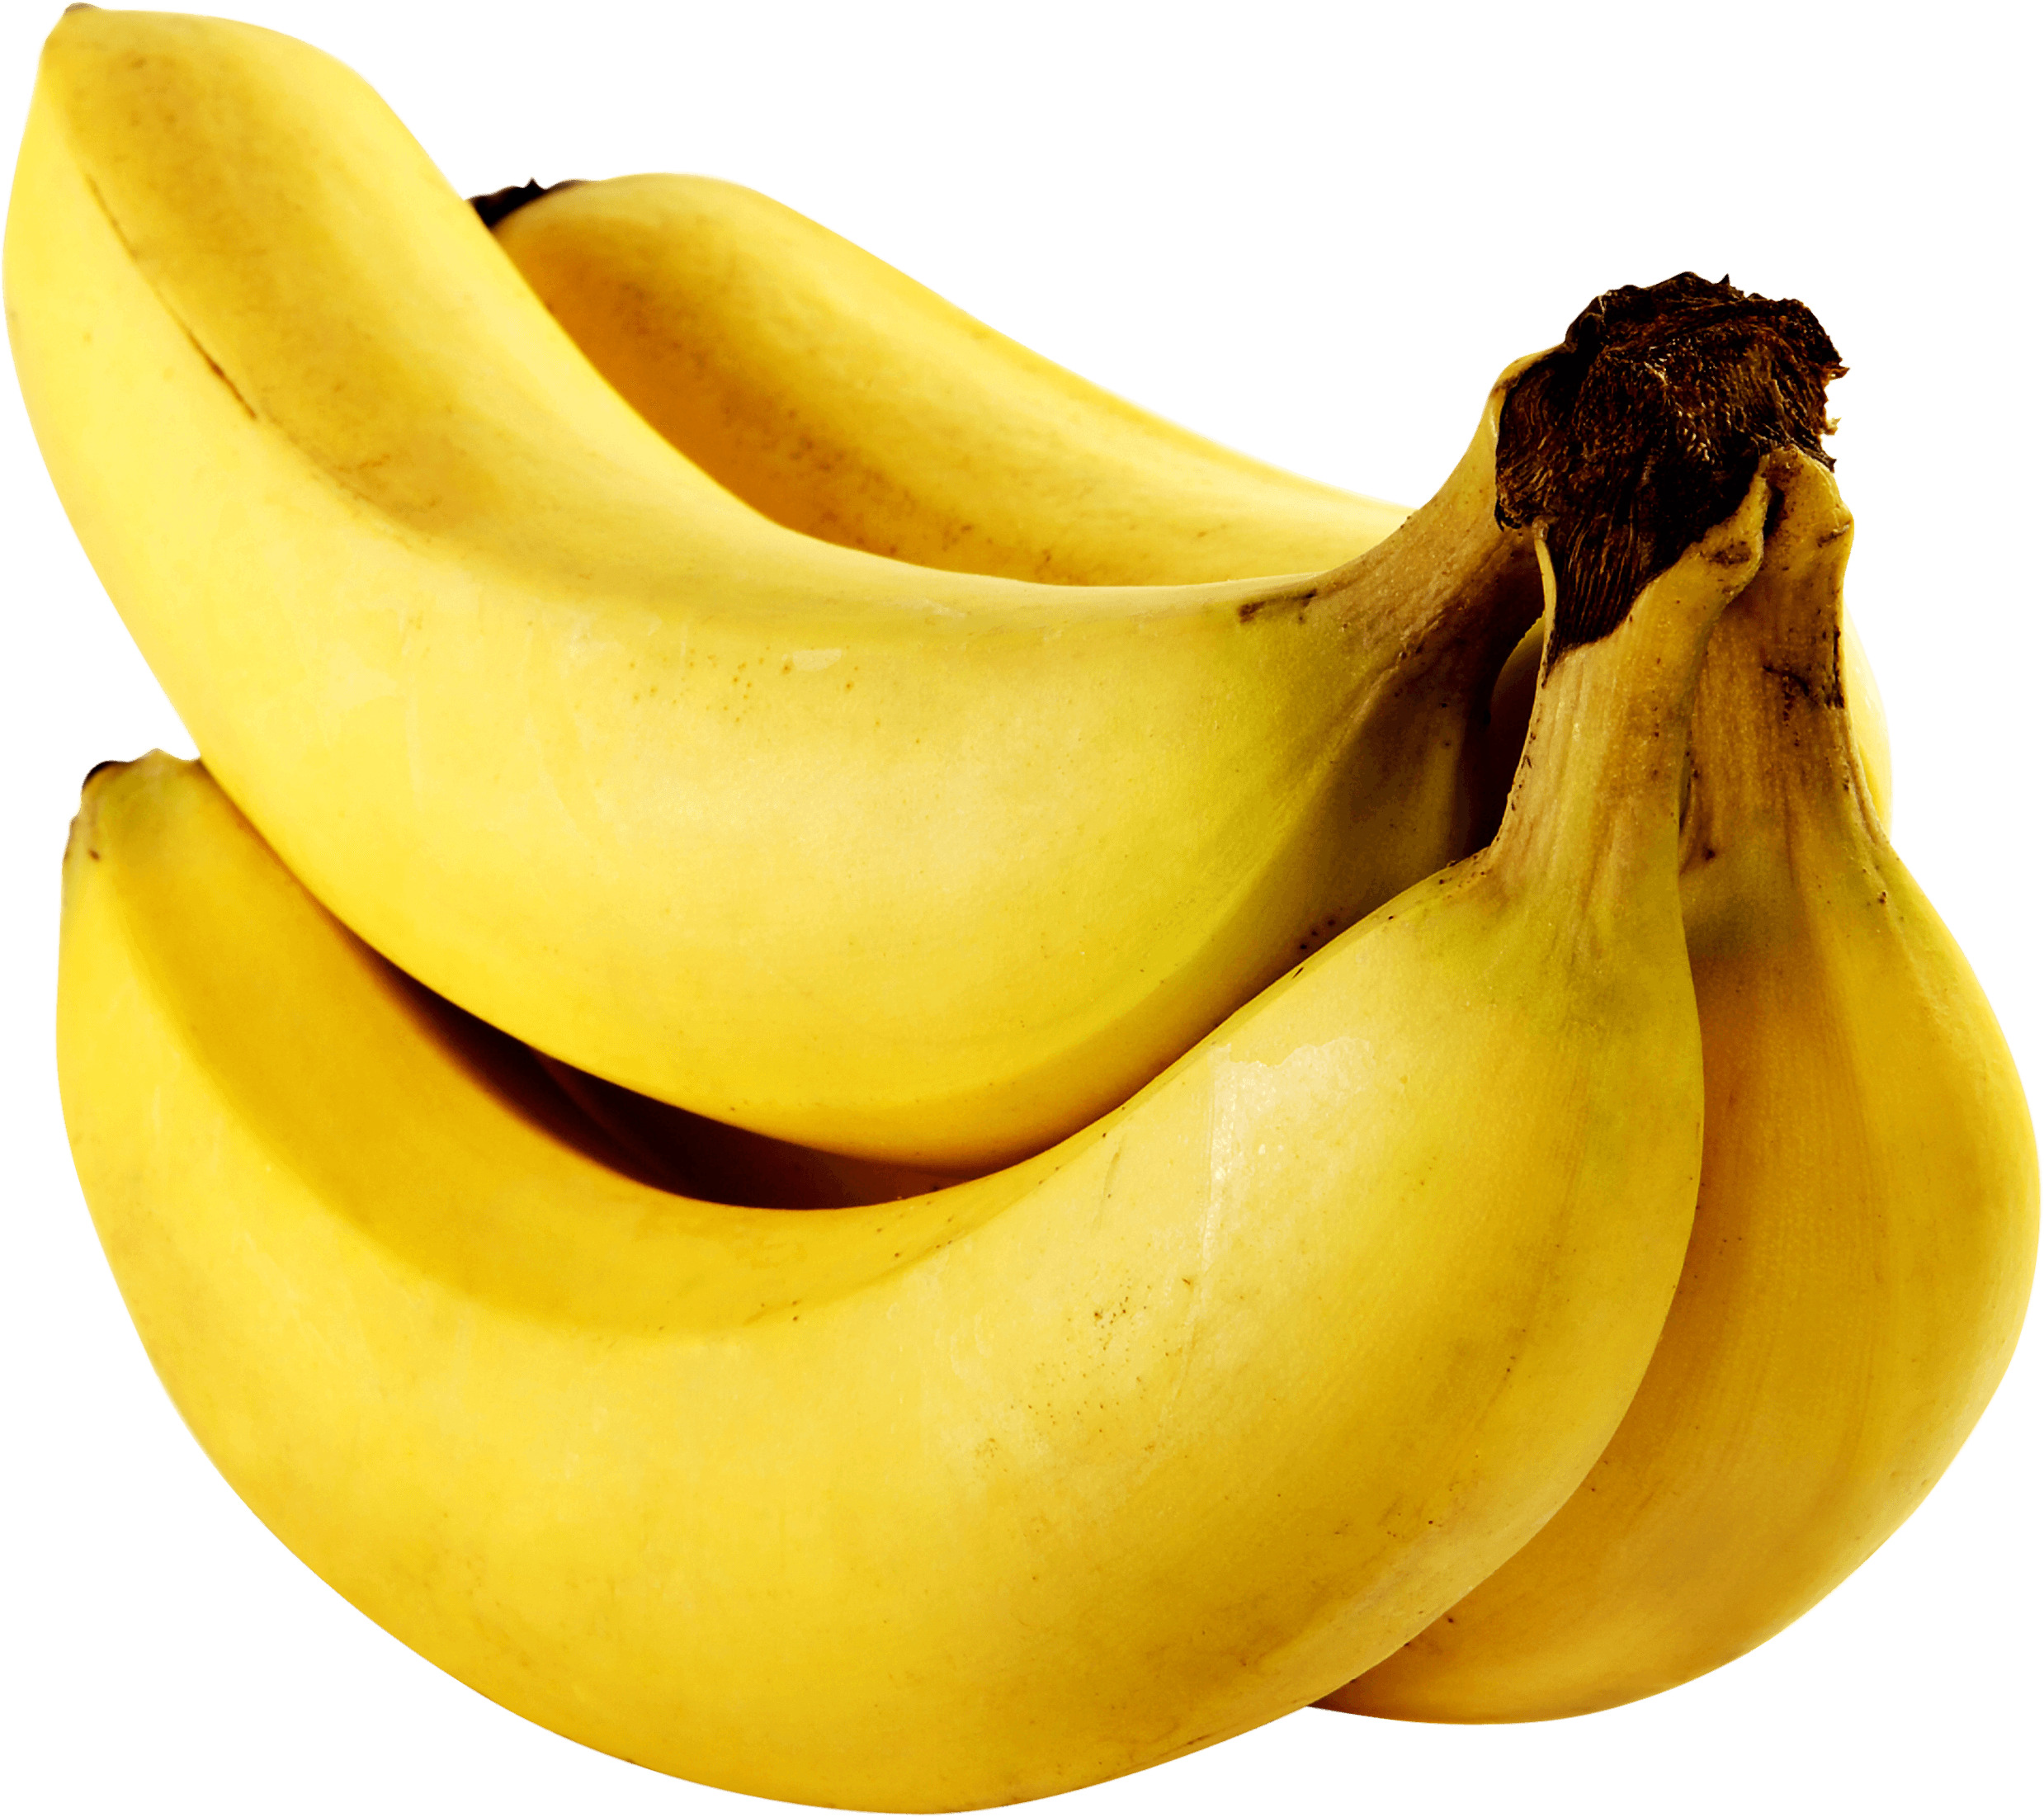 Four Large Bananas png